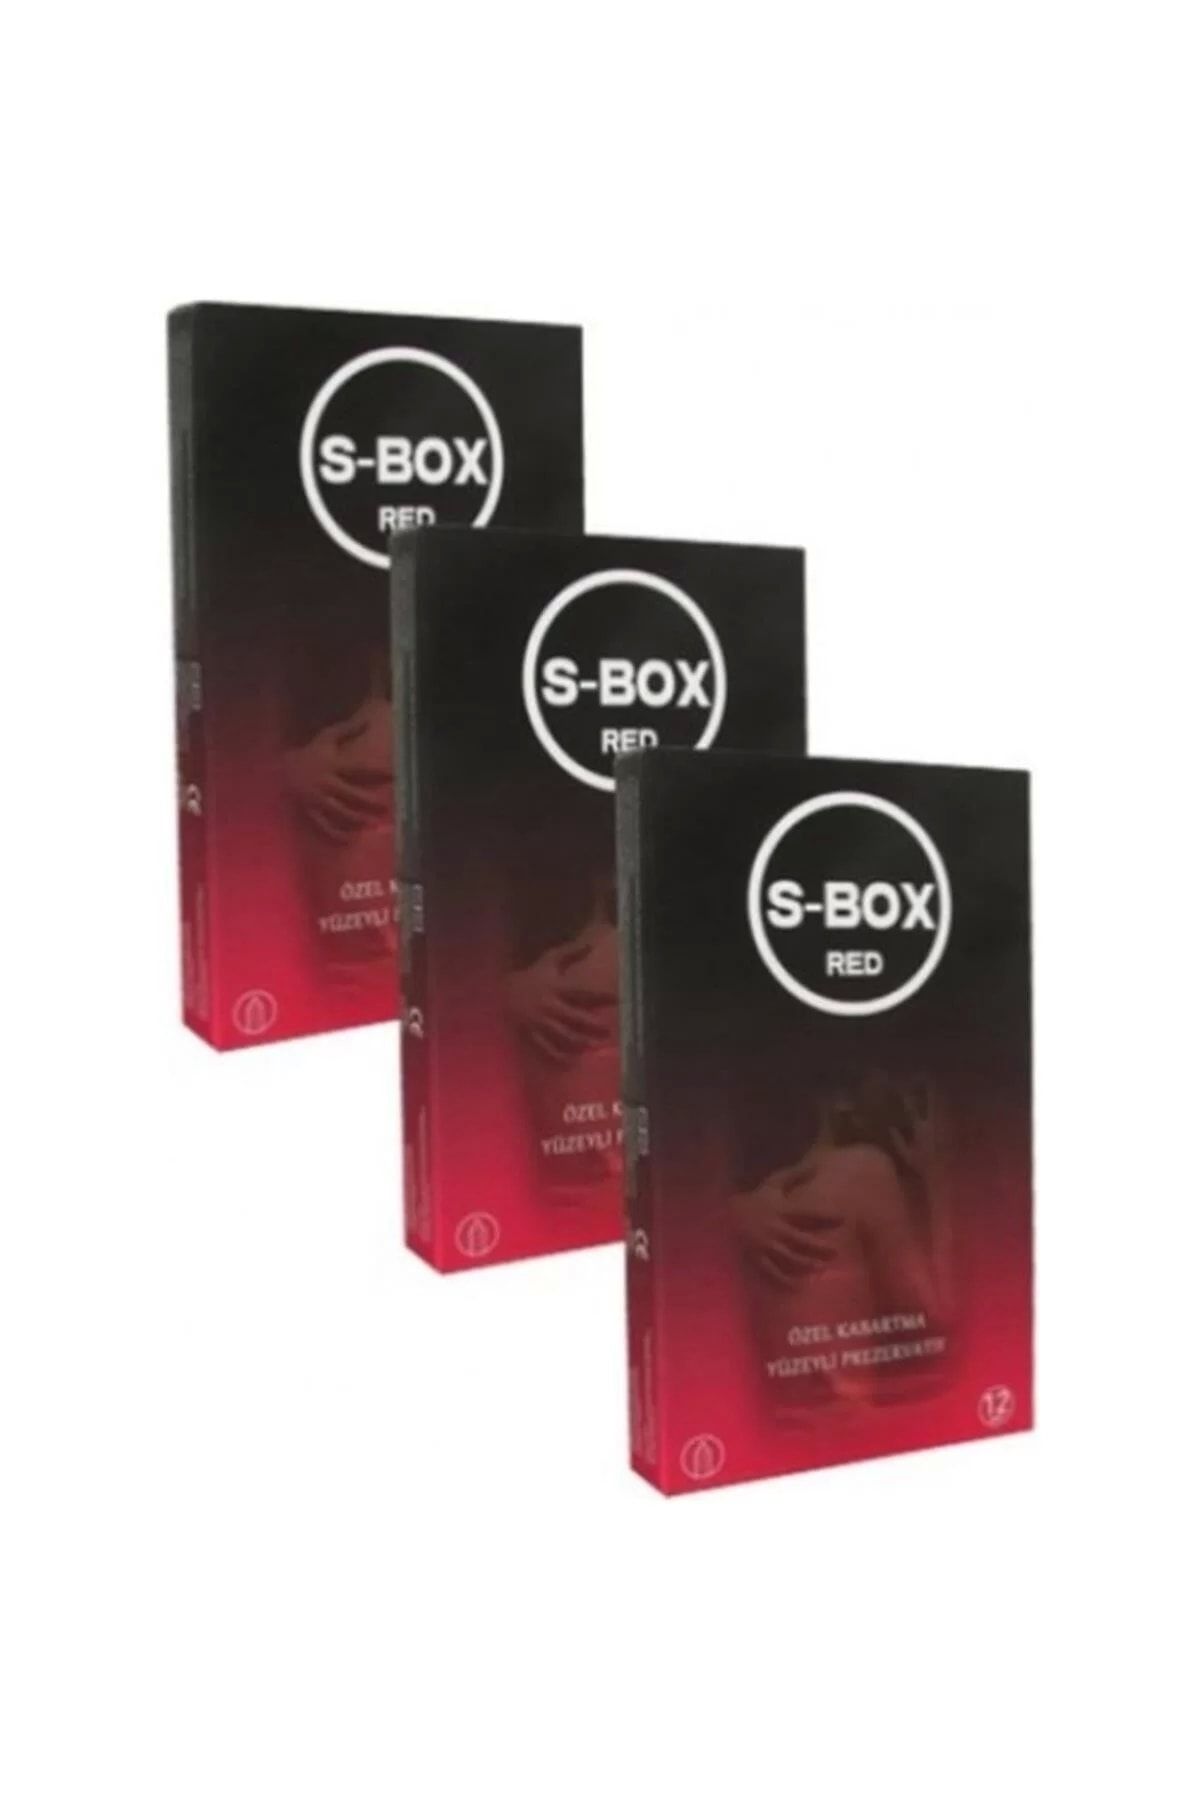 S-Box Red Benekli Prezervatif 3x12'li Paket